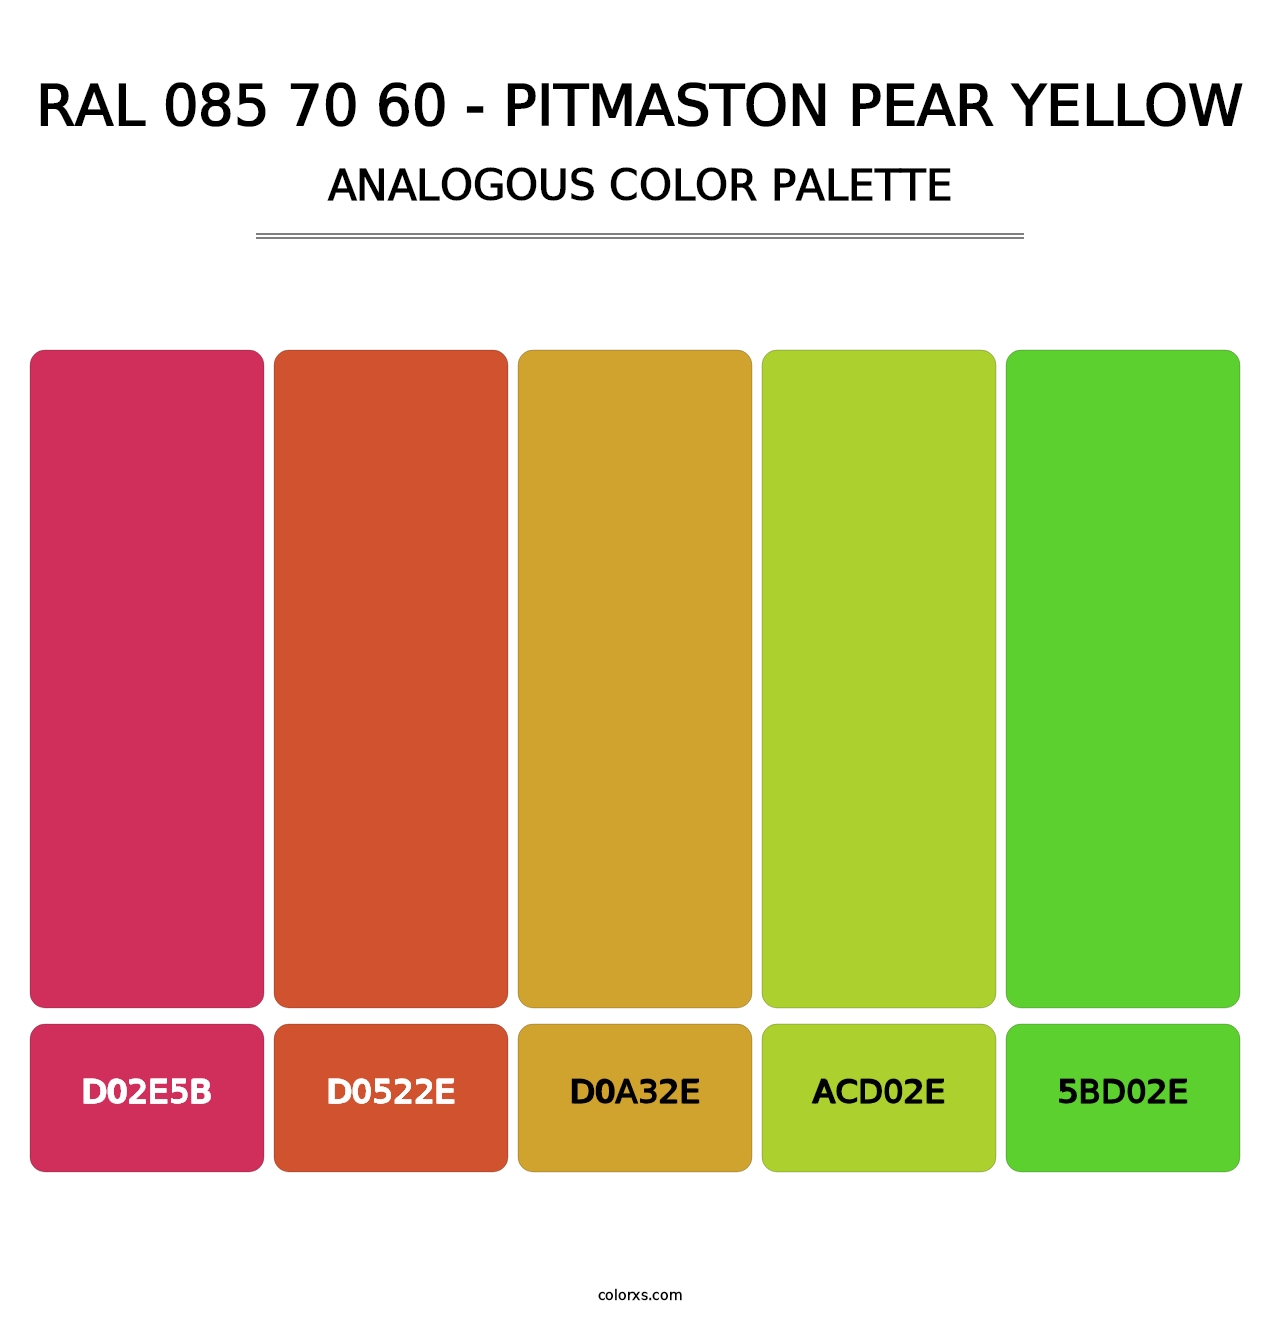 RAL 085 70 60 - Pitmaston Pear Yellow - Analogous Color Palette